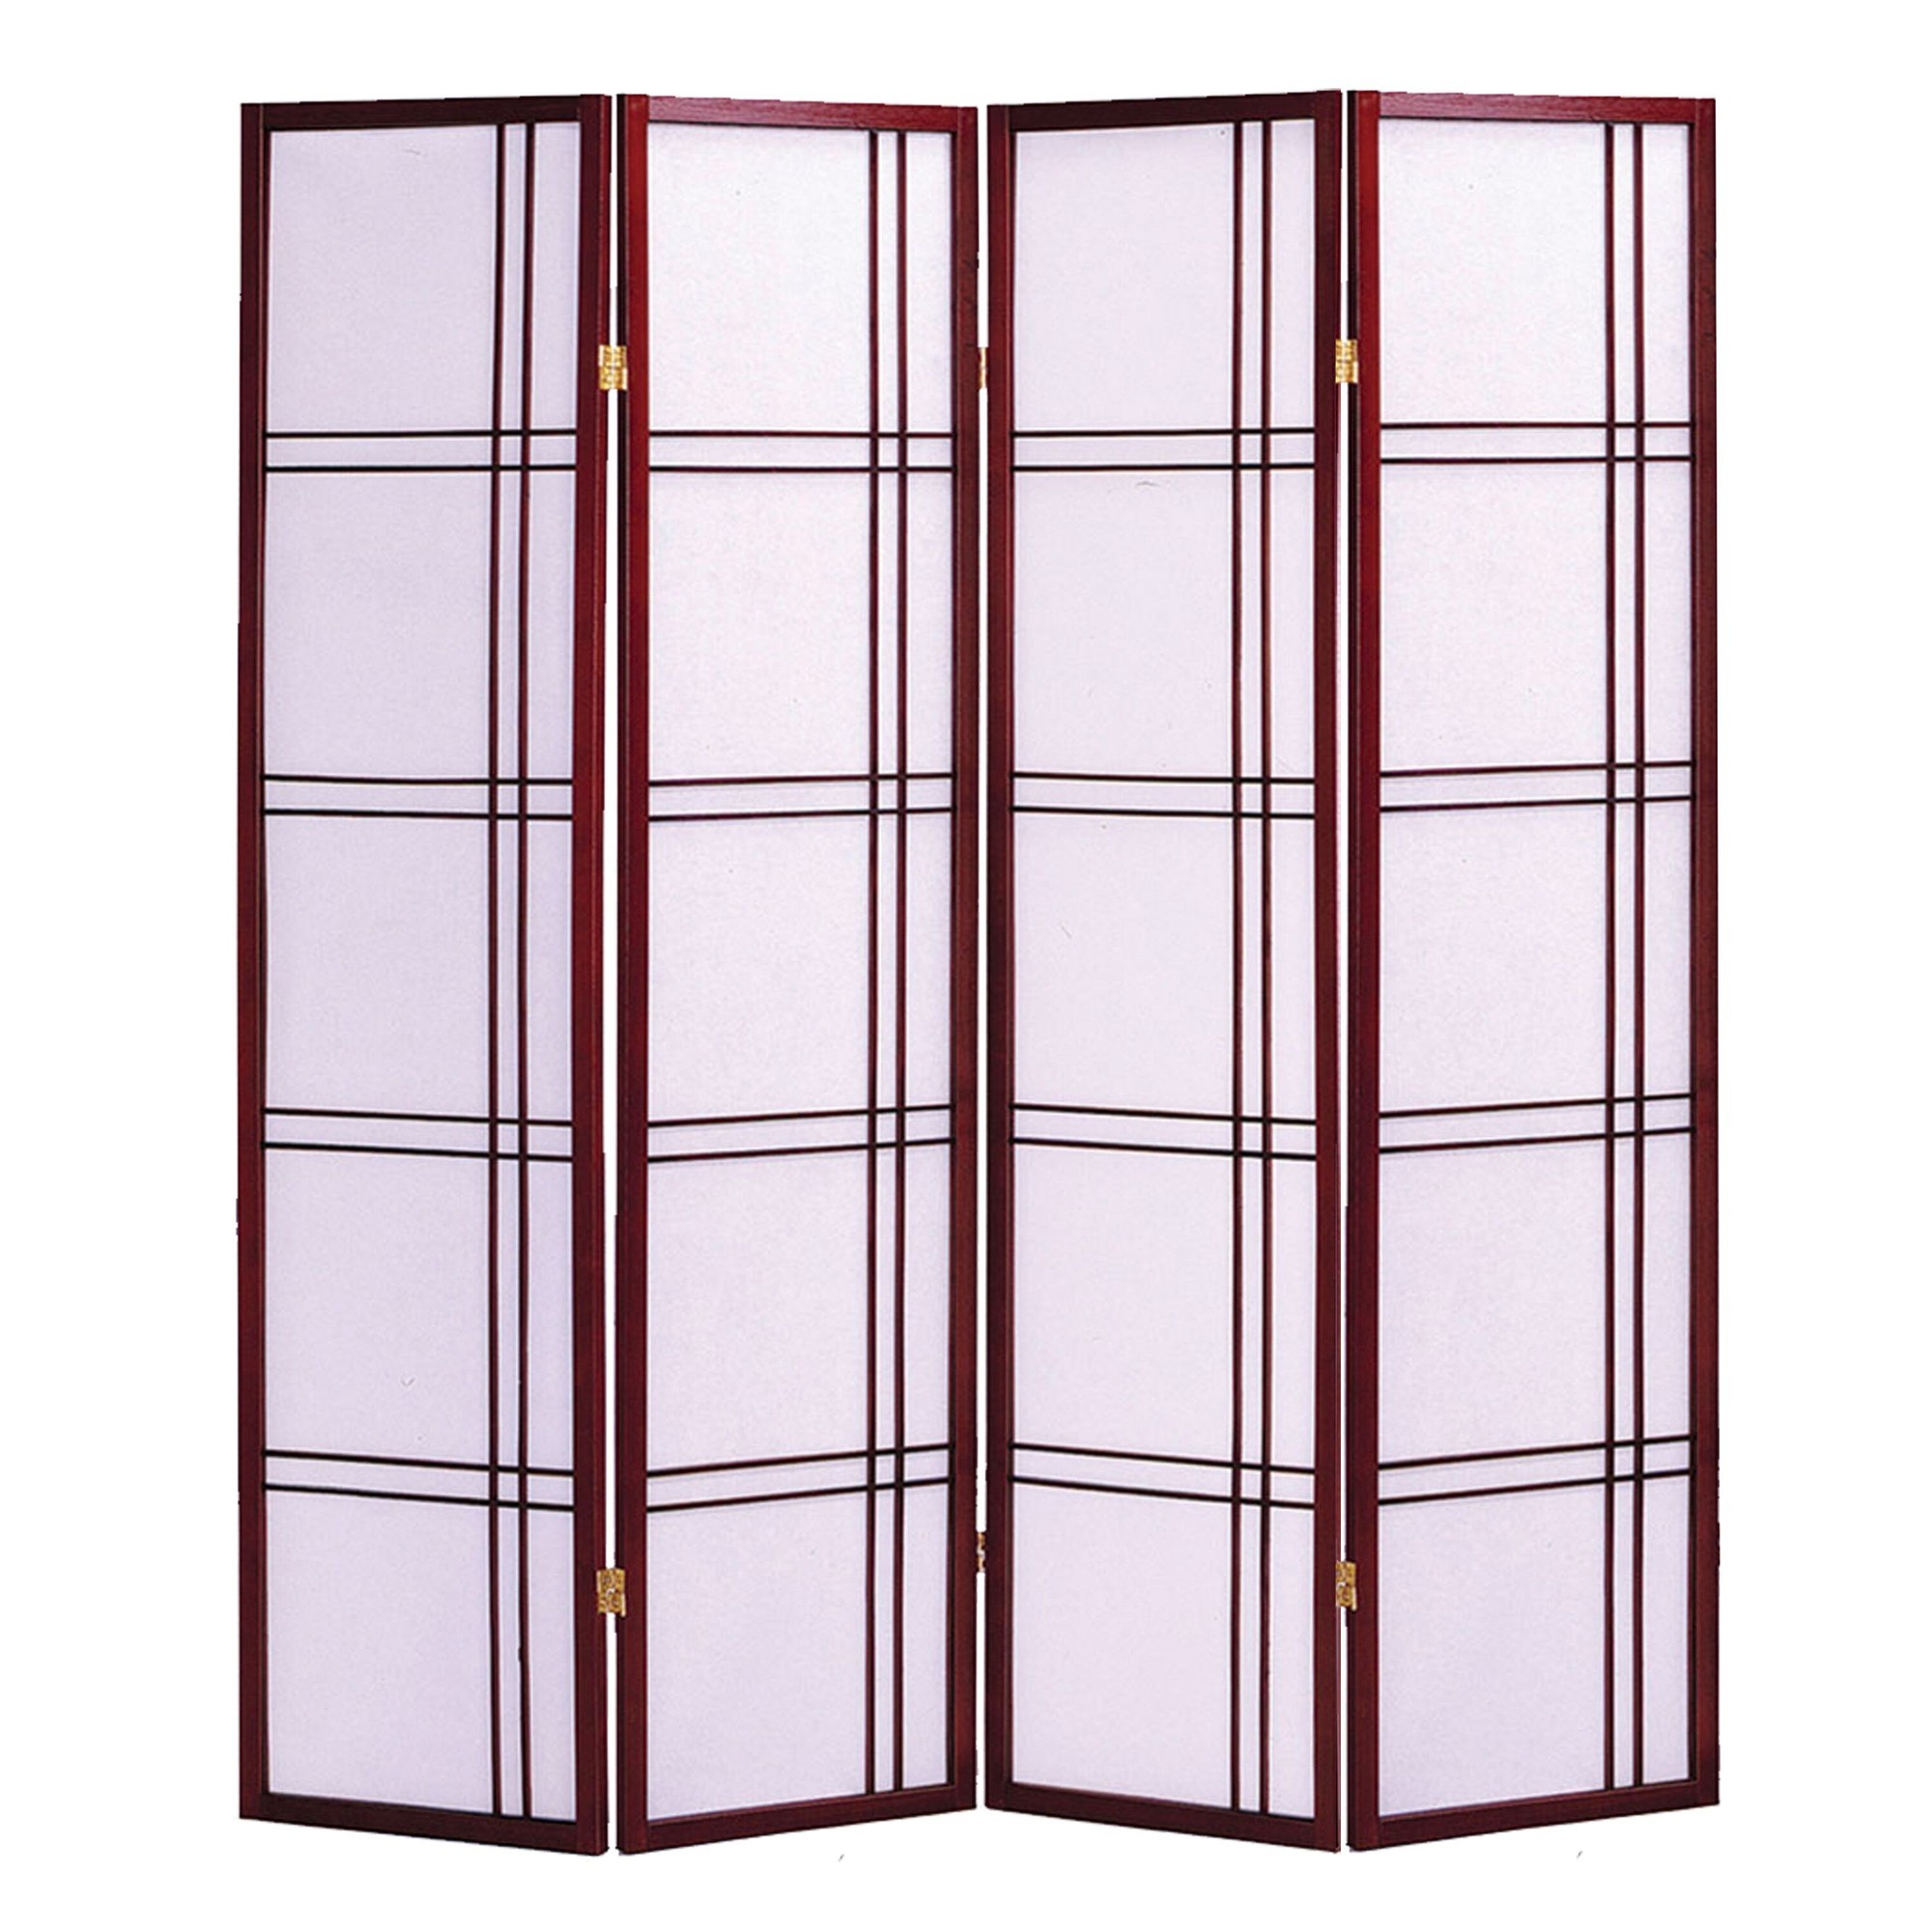 68" x 1" x 70" Traditional Cherry Brown Shoji And Wood 4 Panel Screen